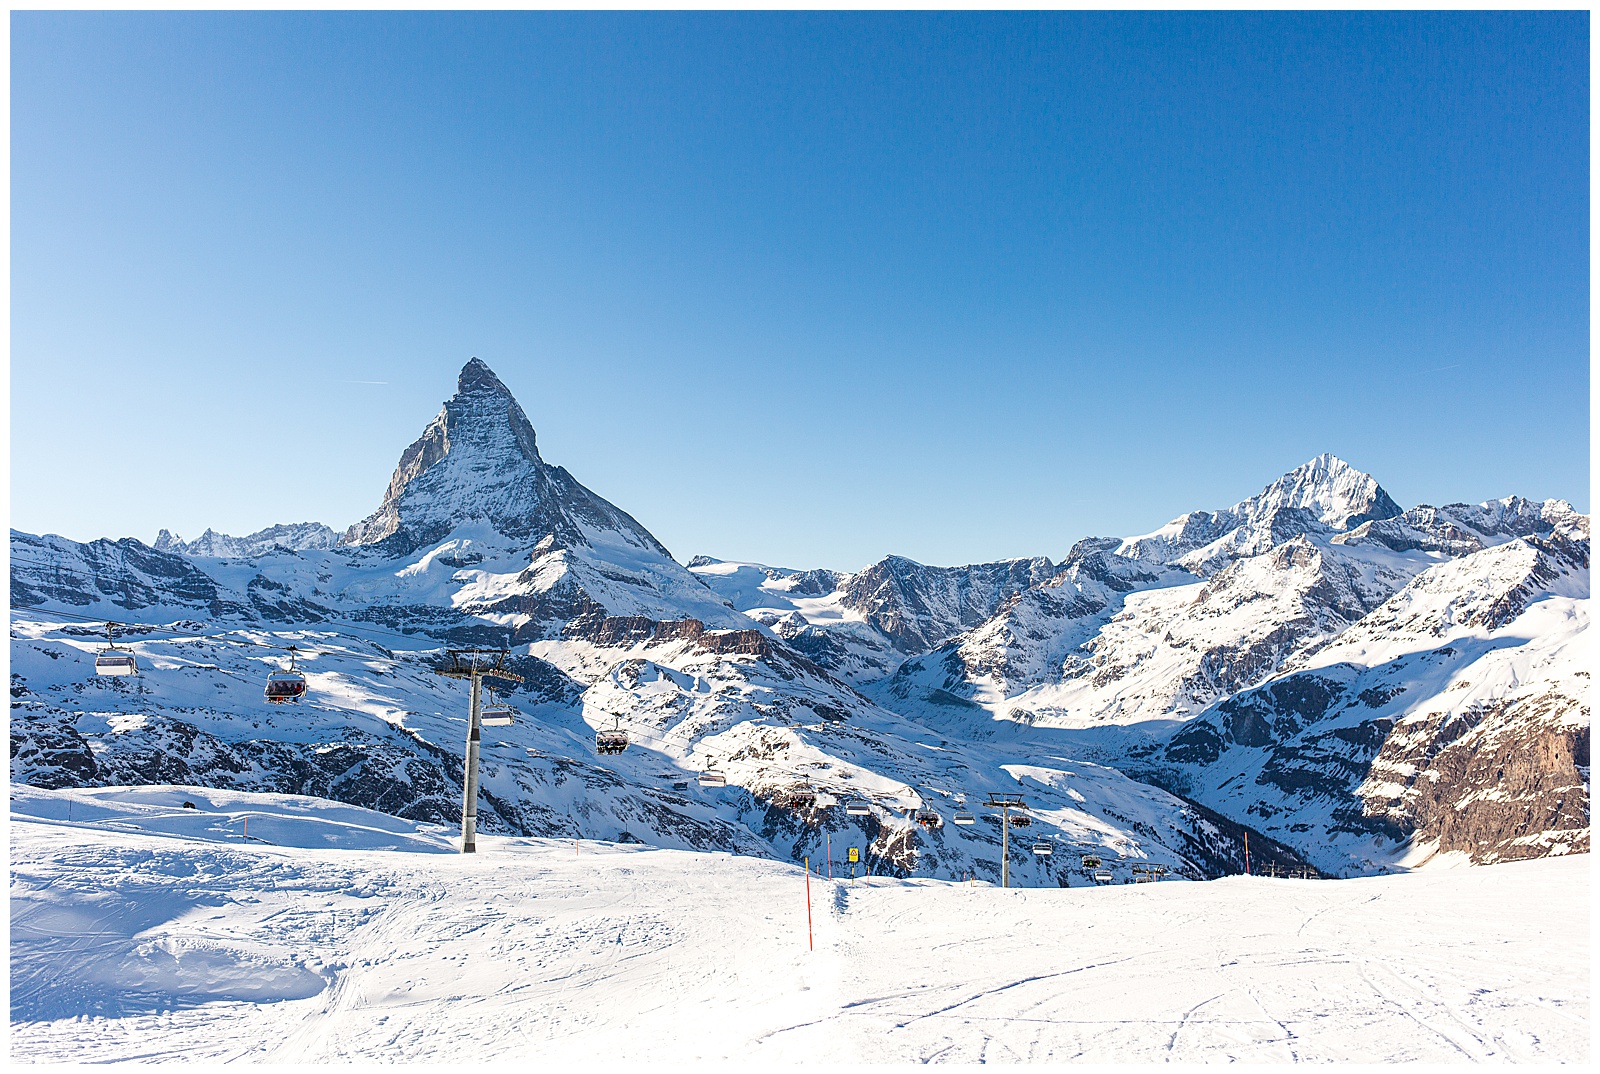 Switzerland winter vacation in Zermatt with views of the Matterhorn